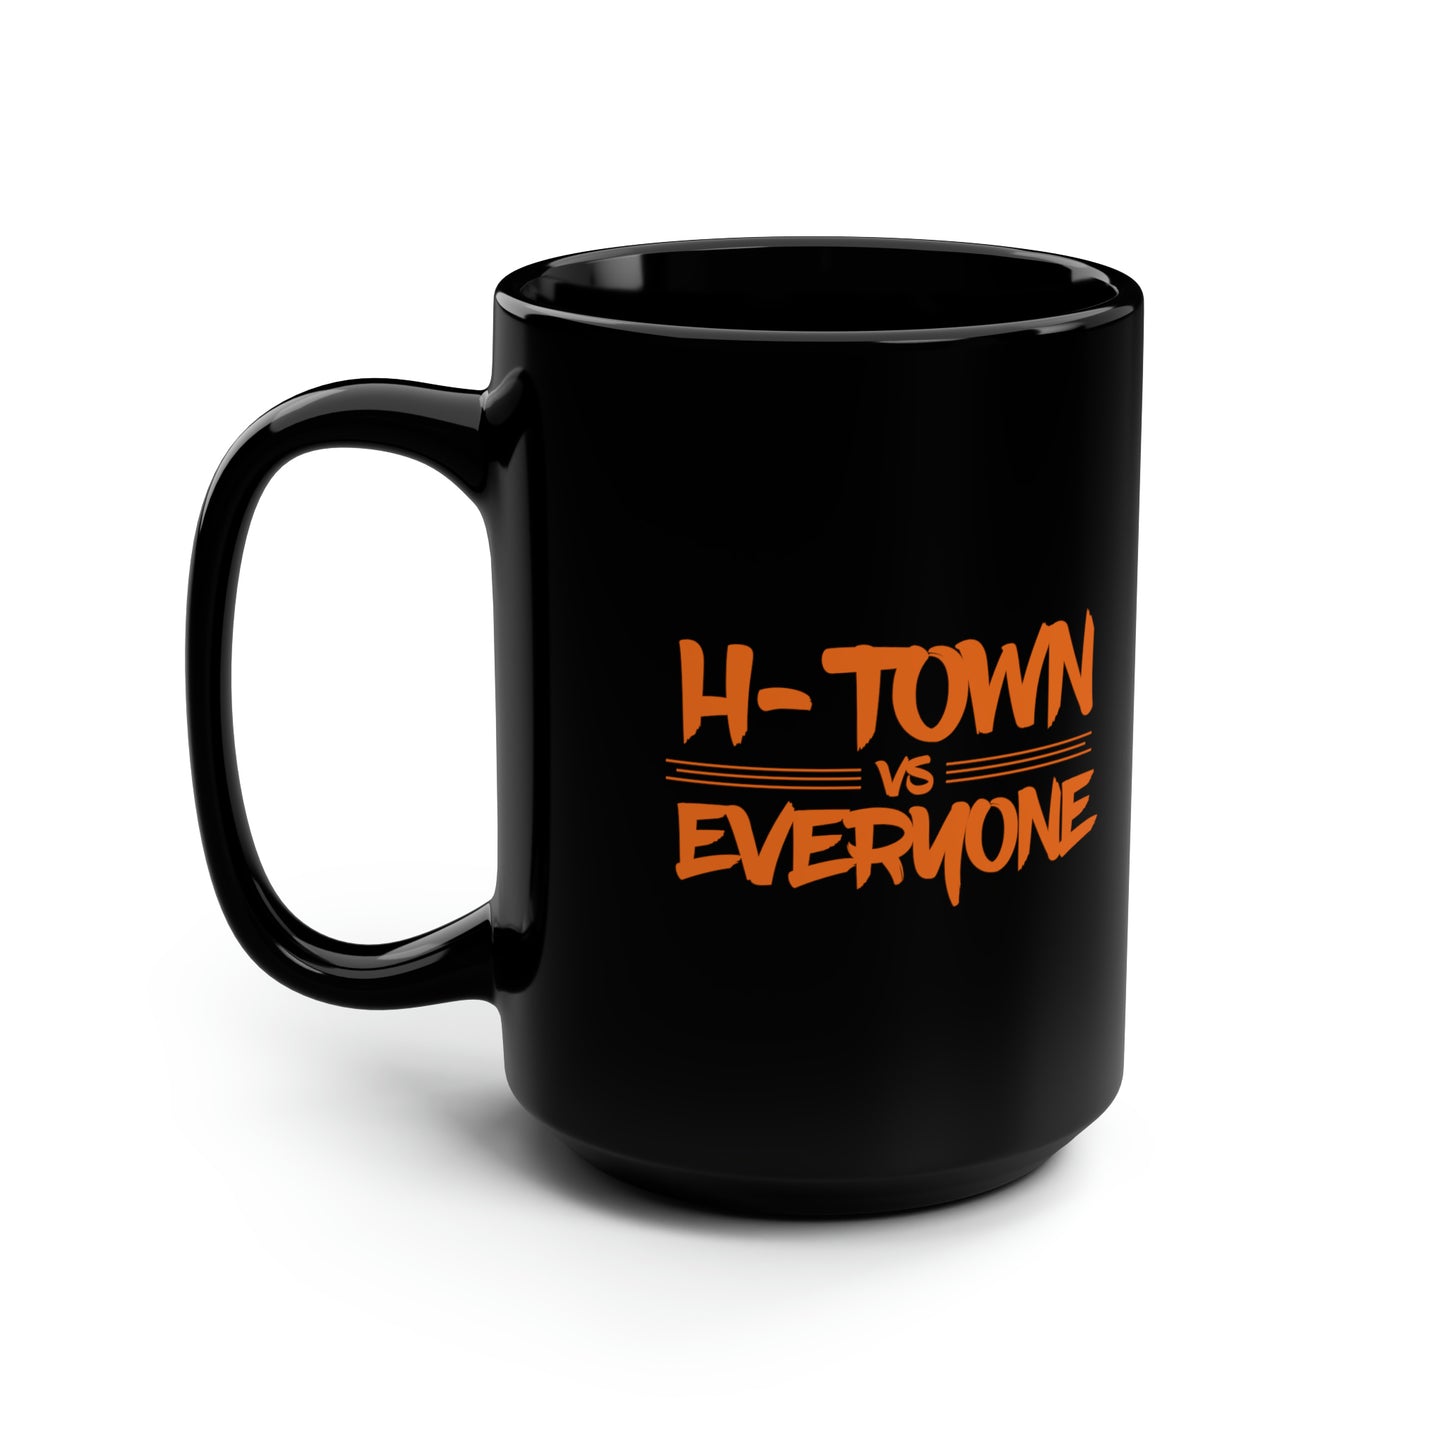 H-Town vs Everyone Mug 15oz